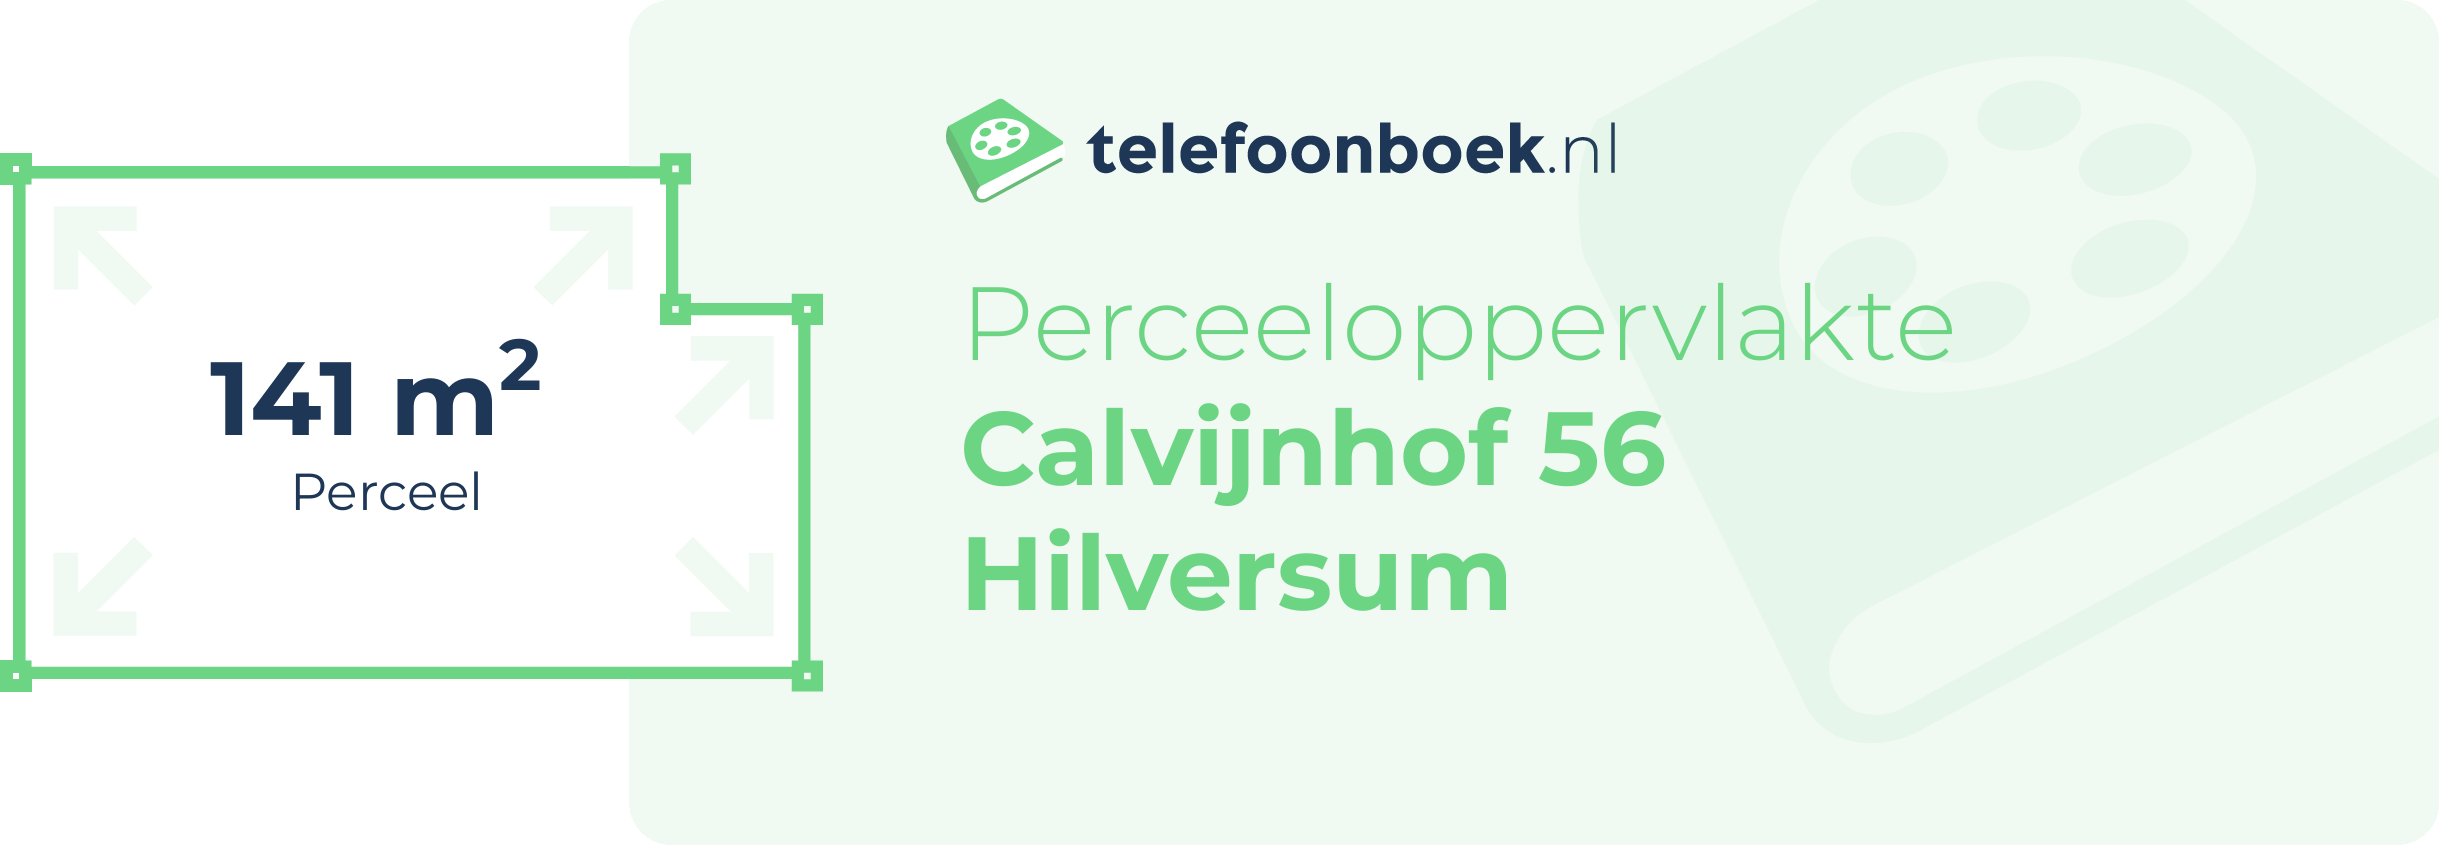 Perceeloppervlakte Calvijnhof 56 Hilversum